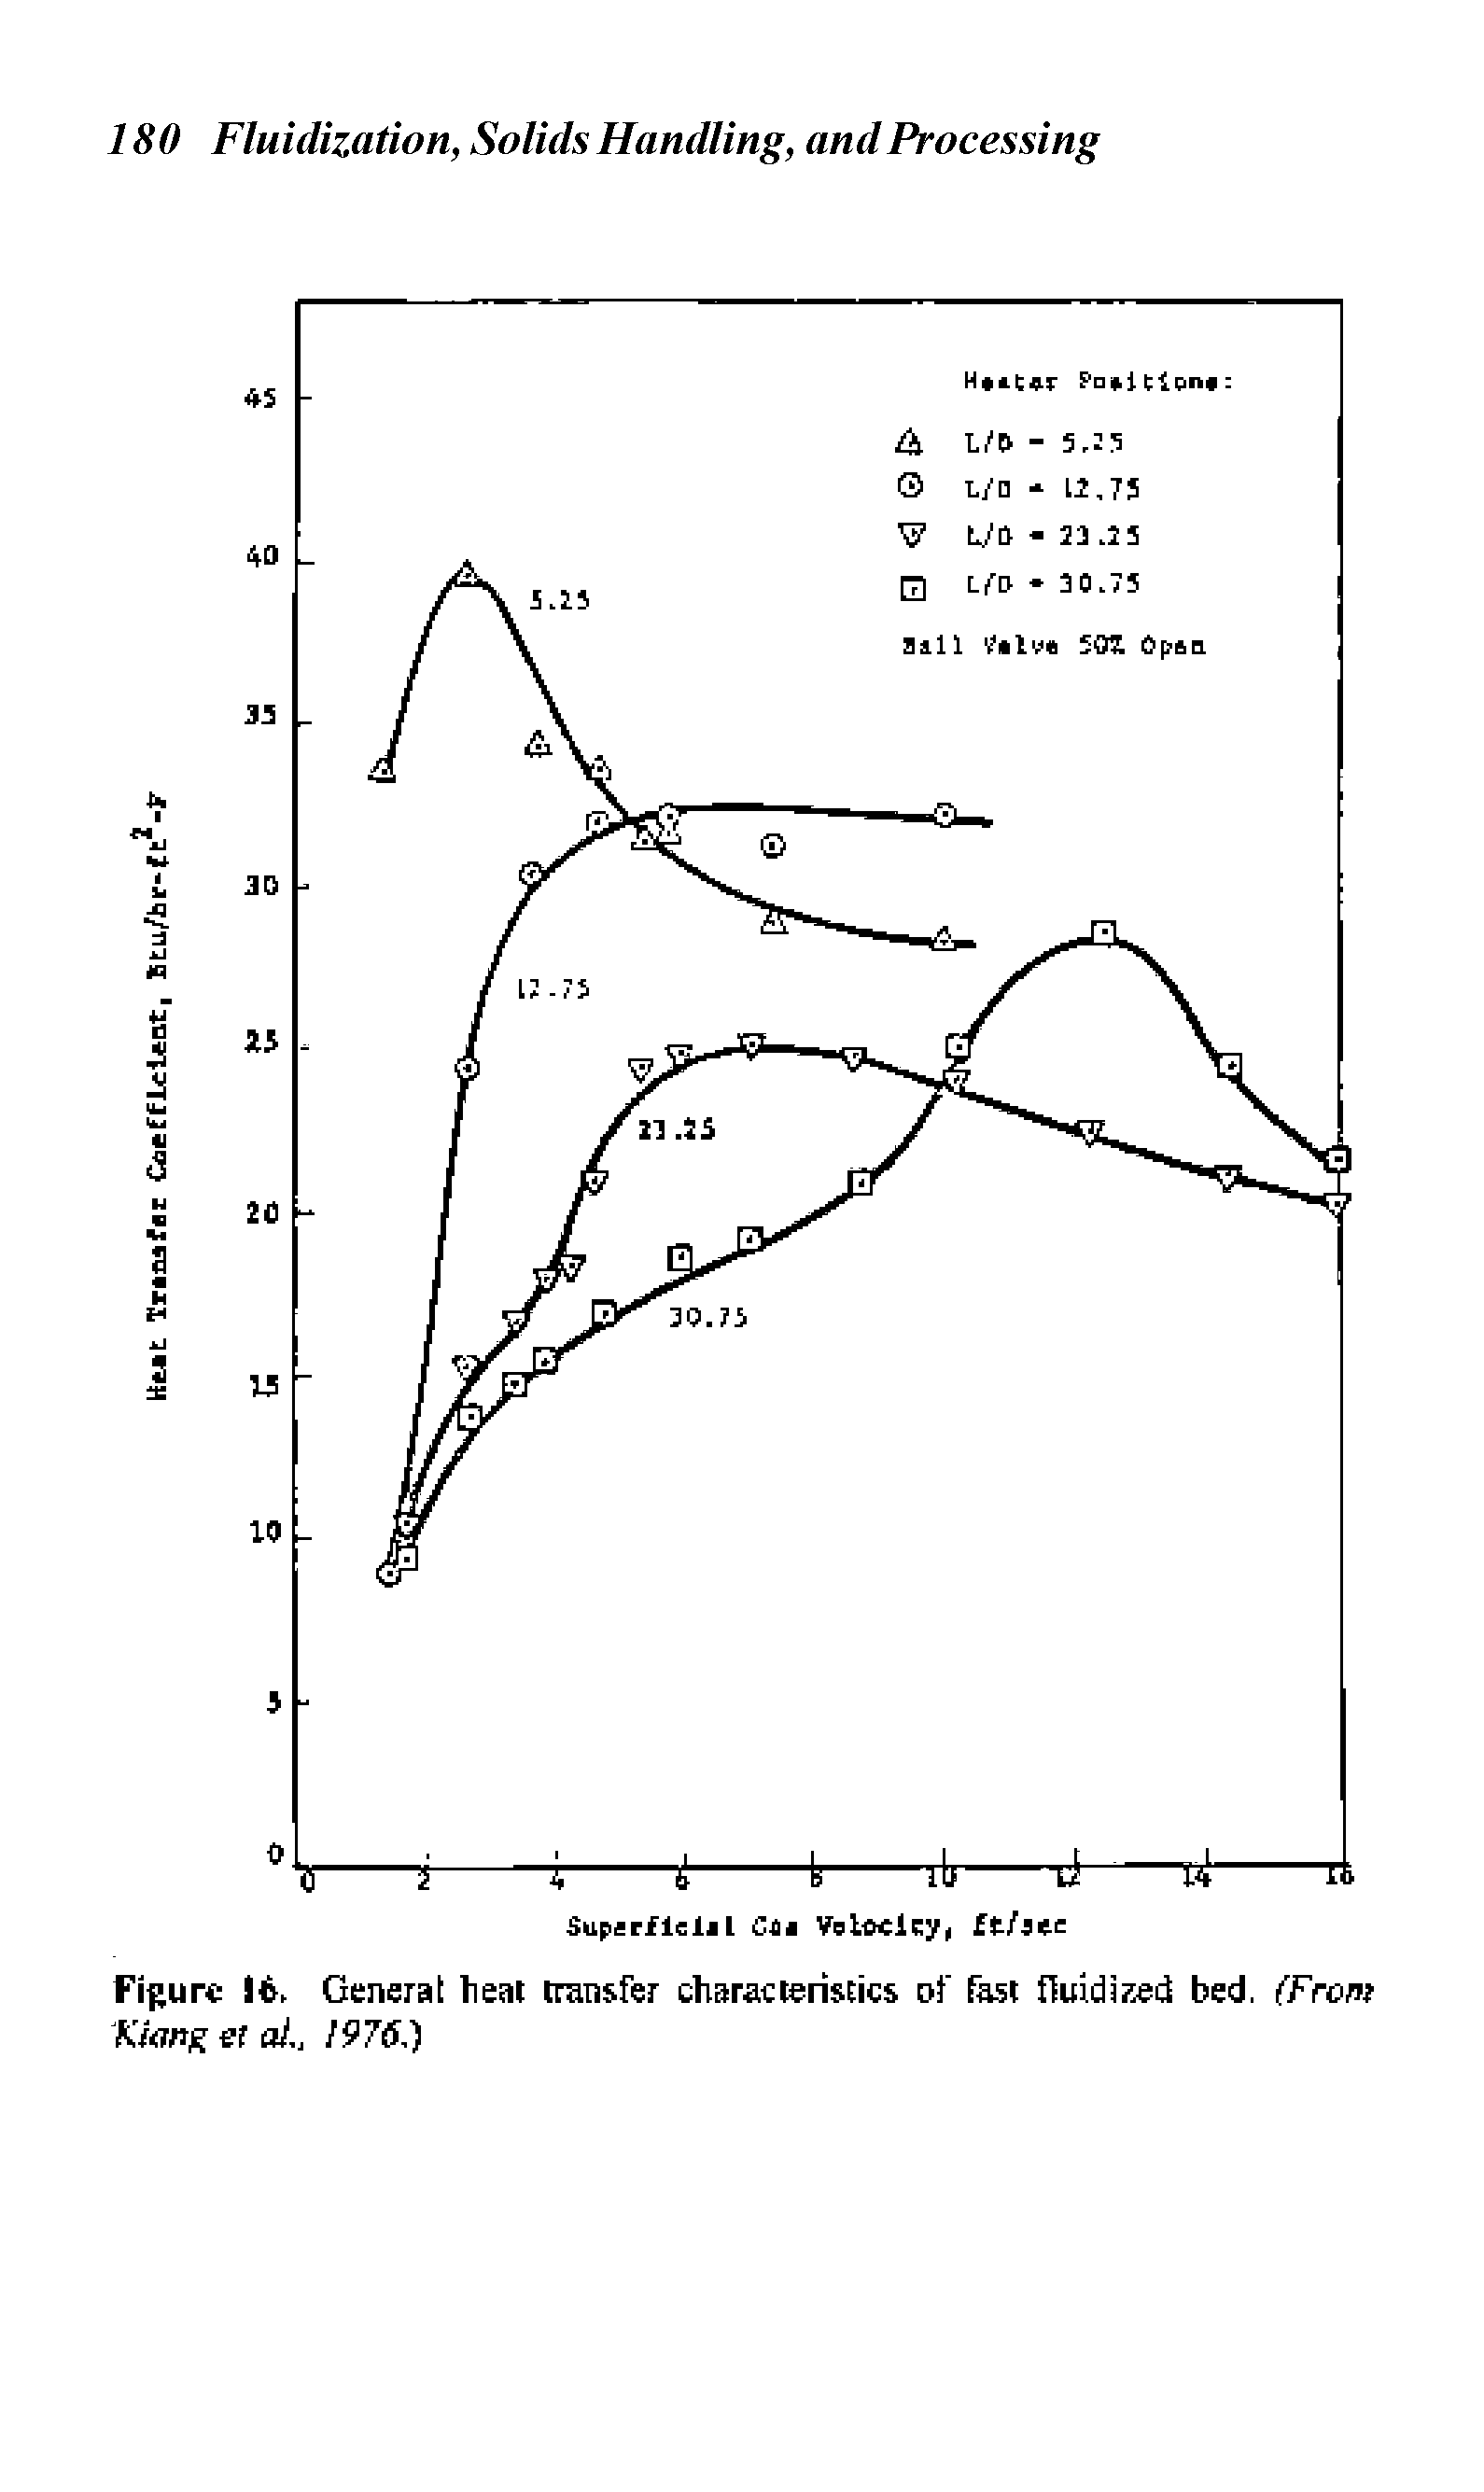 Figure 16, General heat transfer characteristics of fast fluidized bed. (Front Kiartg el at., 1976.)...